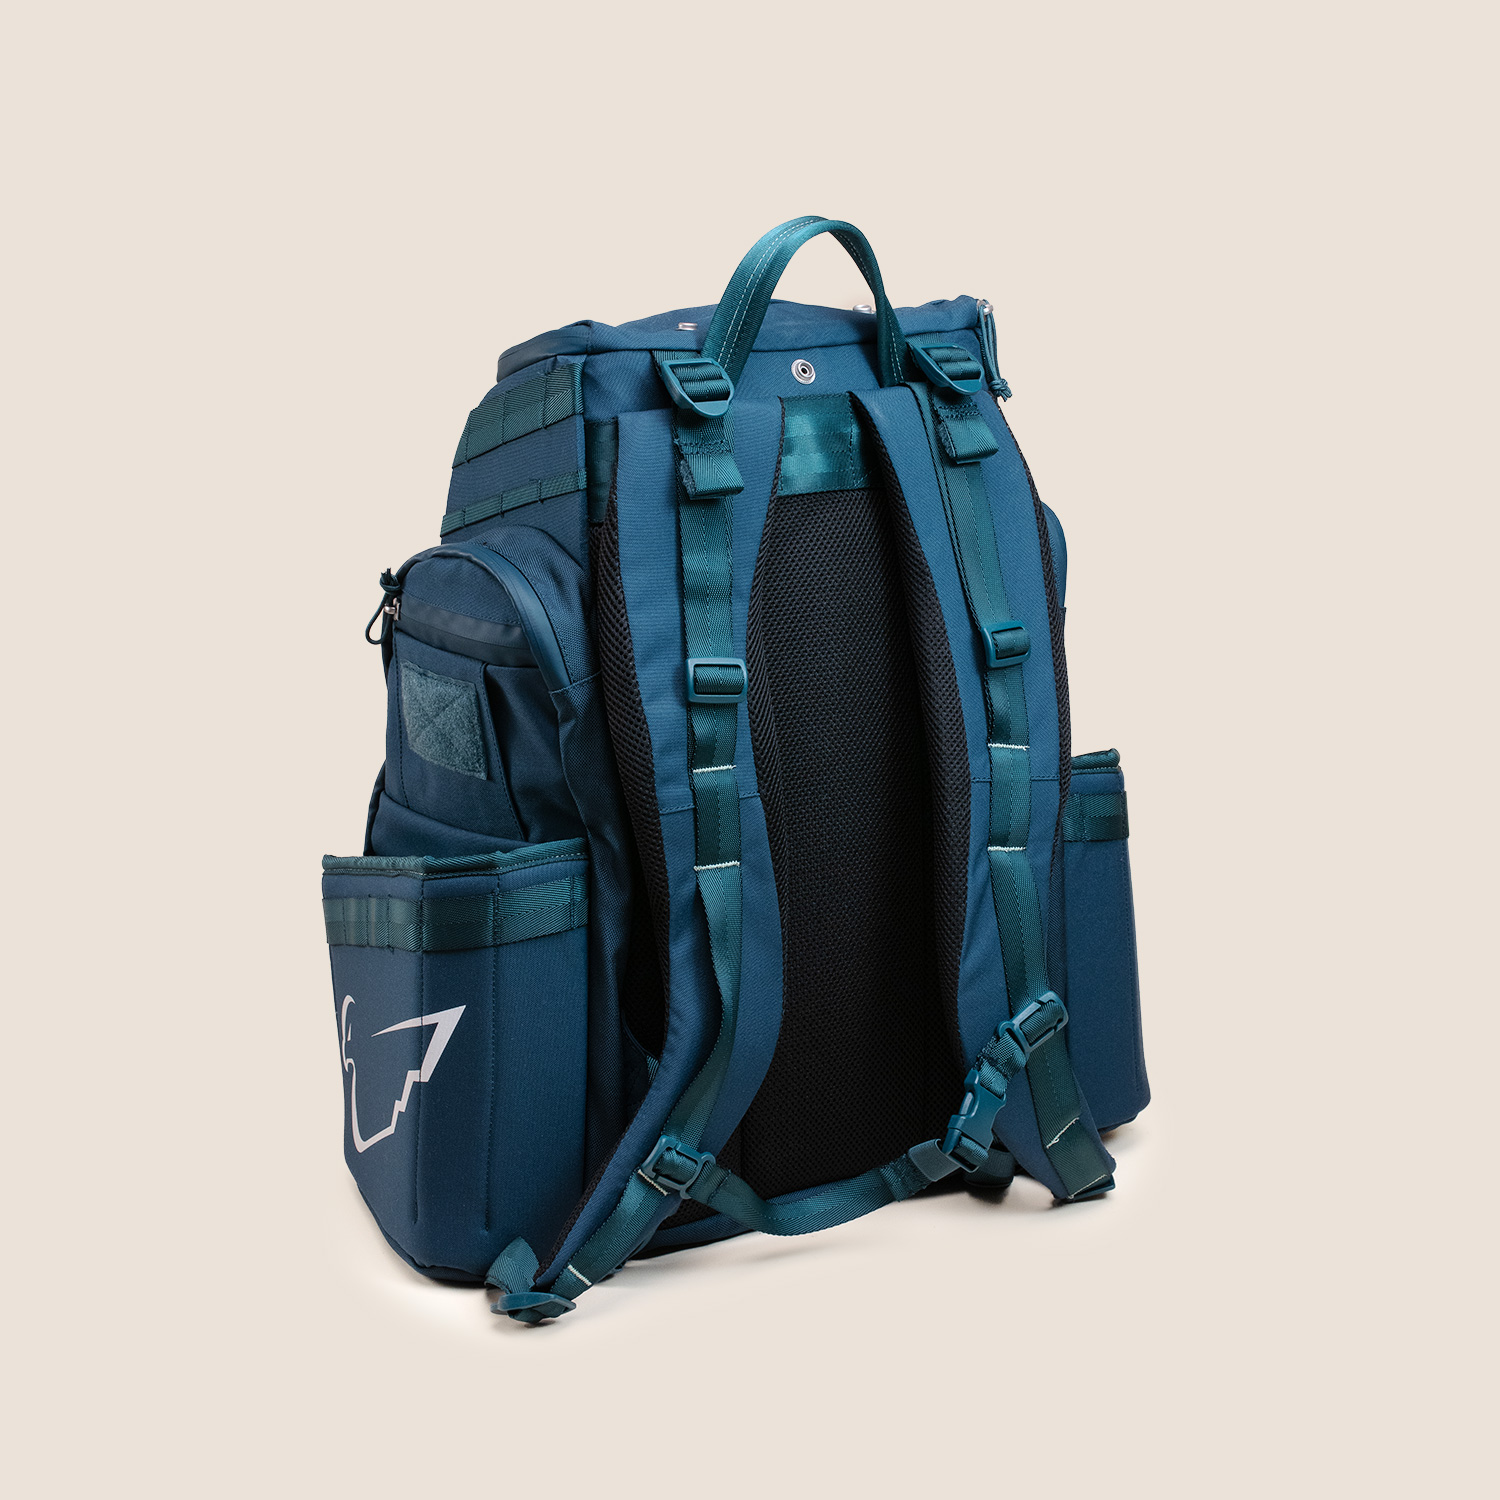 Case european Birdies grön ryggsäck backpack discgolfväska back